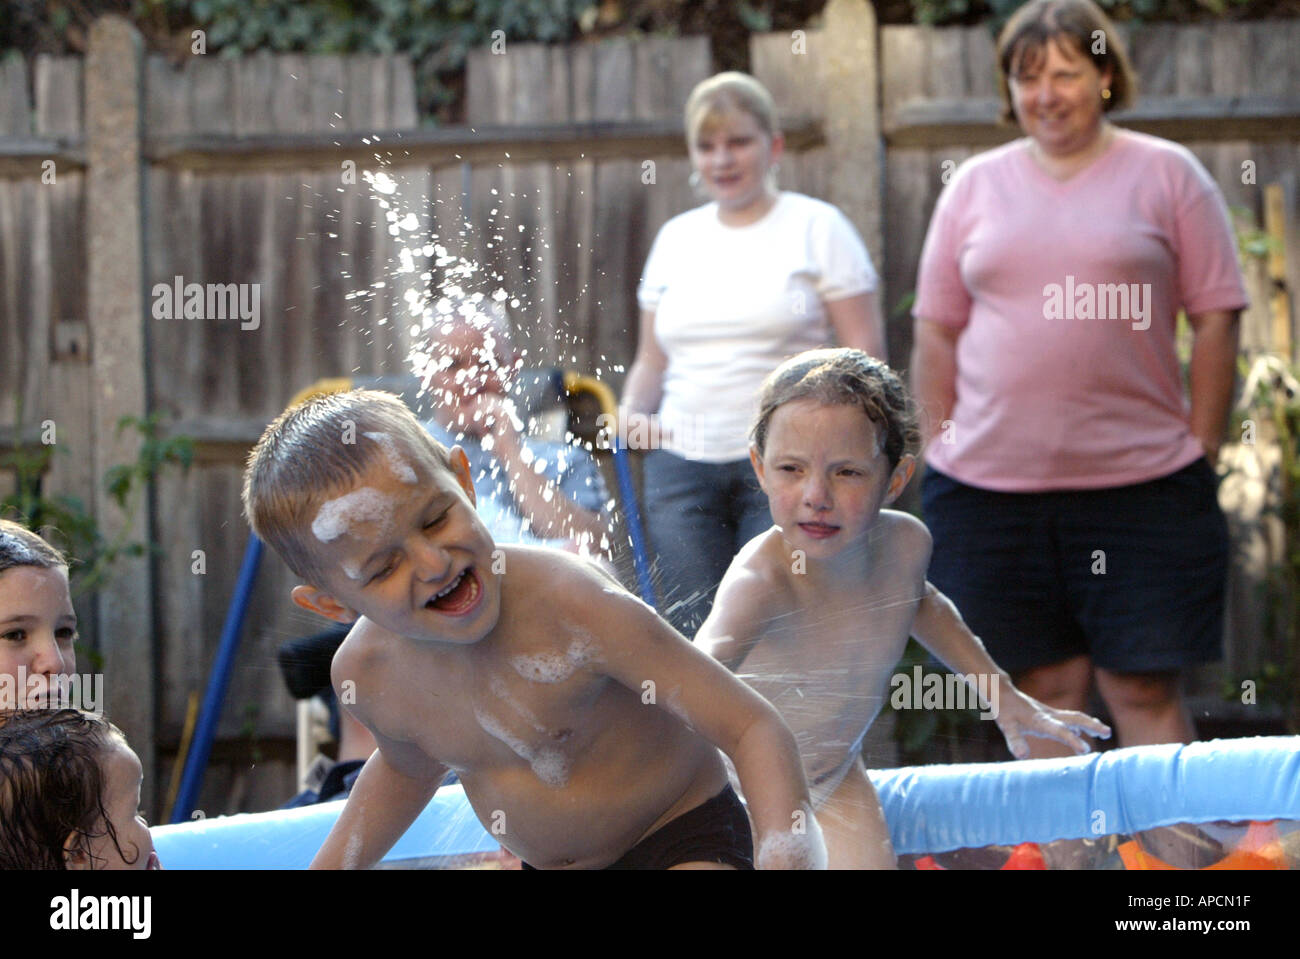 High spirited family play in garden paddling pool Stock Photo